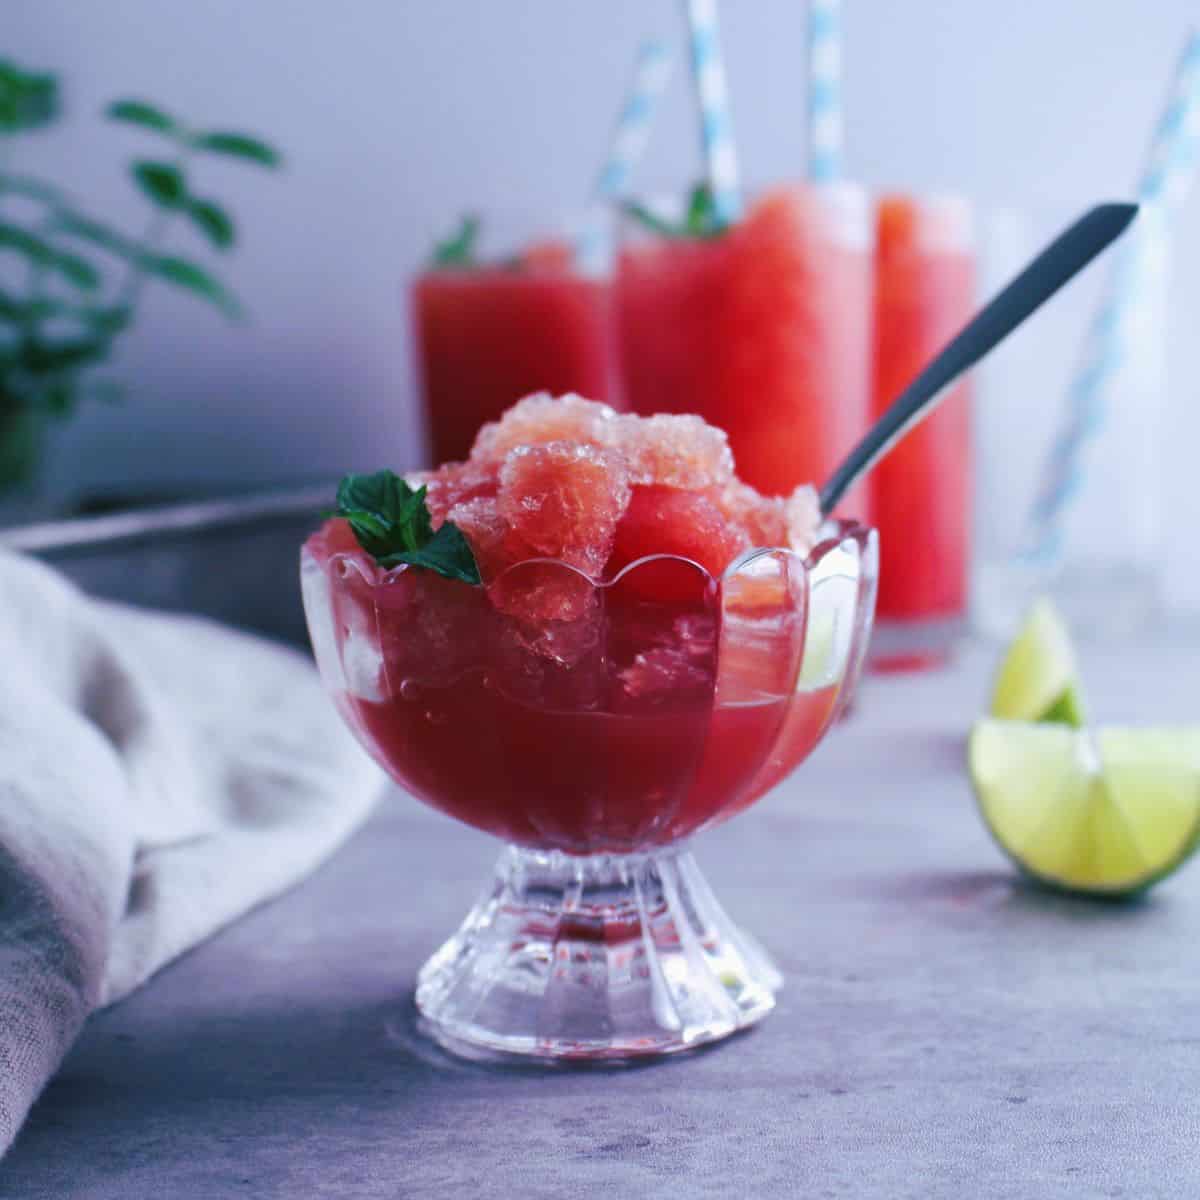 Featured image for “Refreshing Watermelon Mint Granita or Slushie”